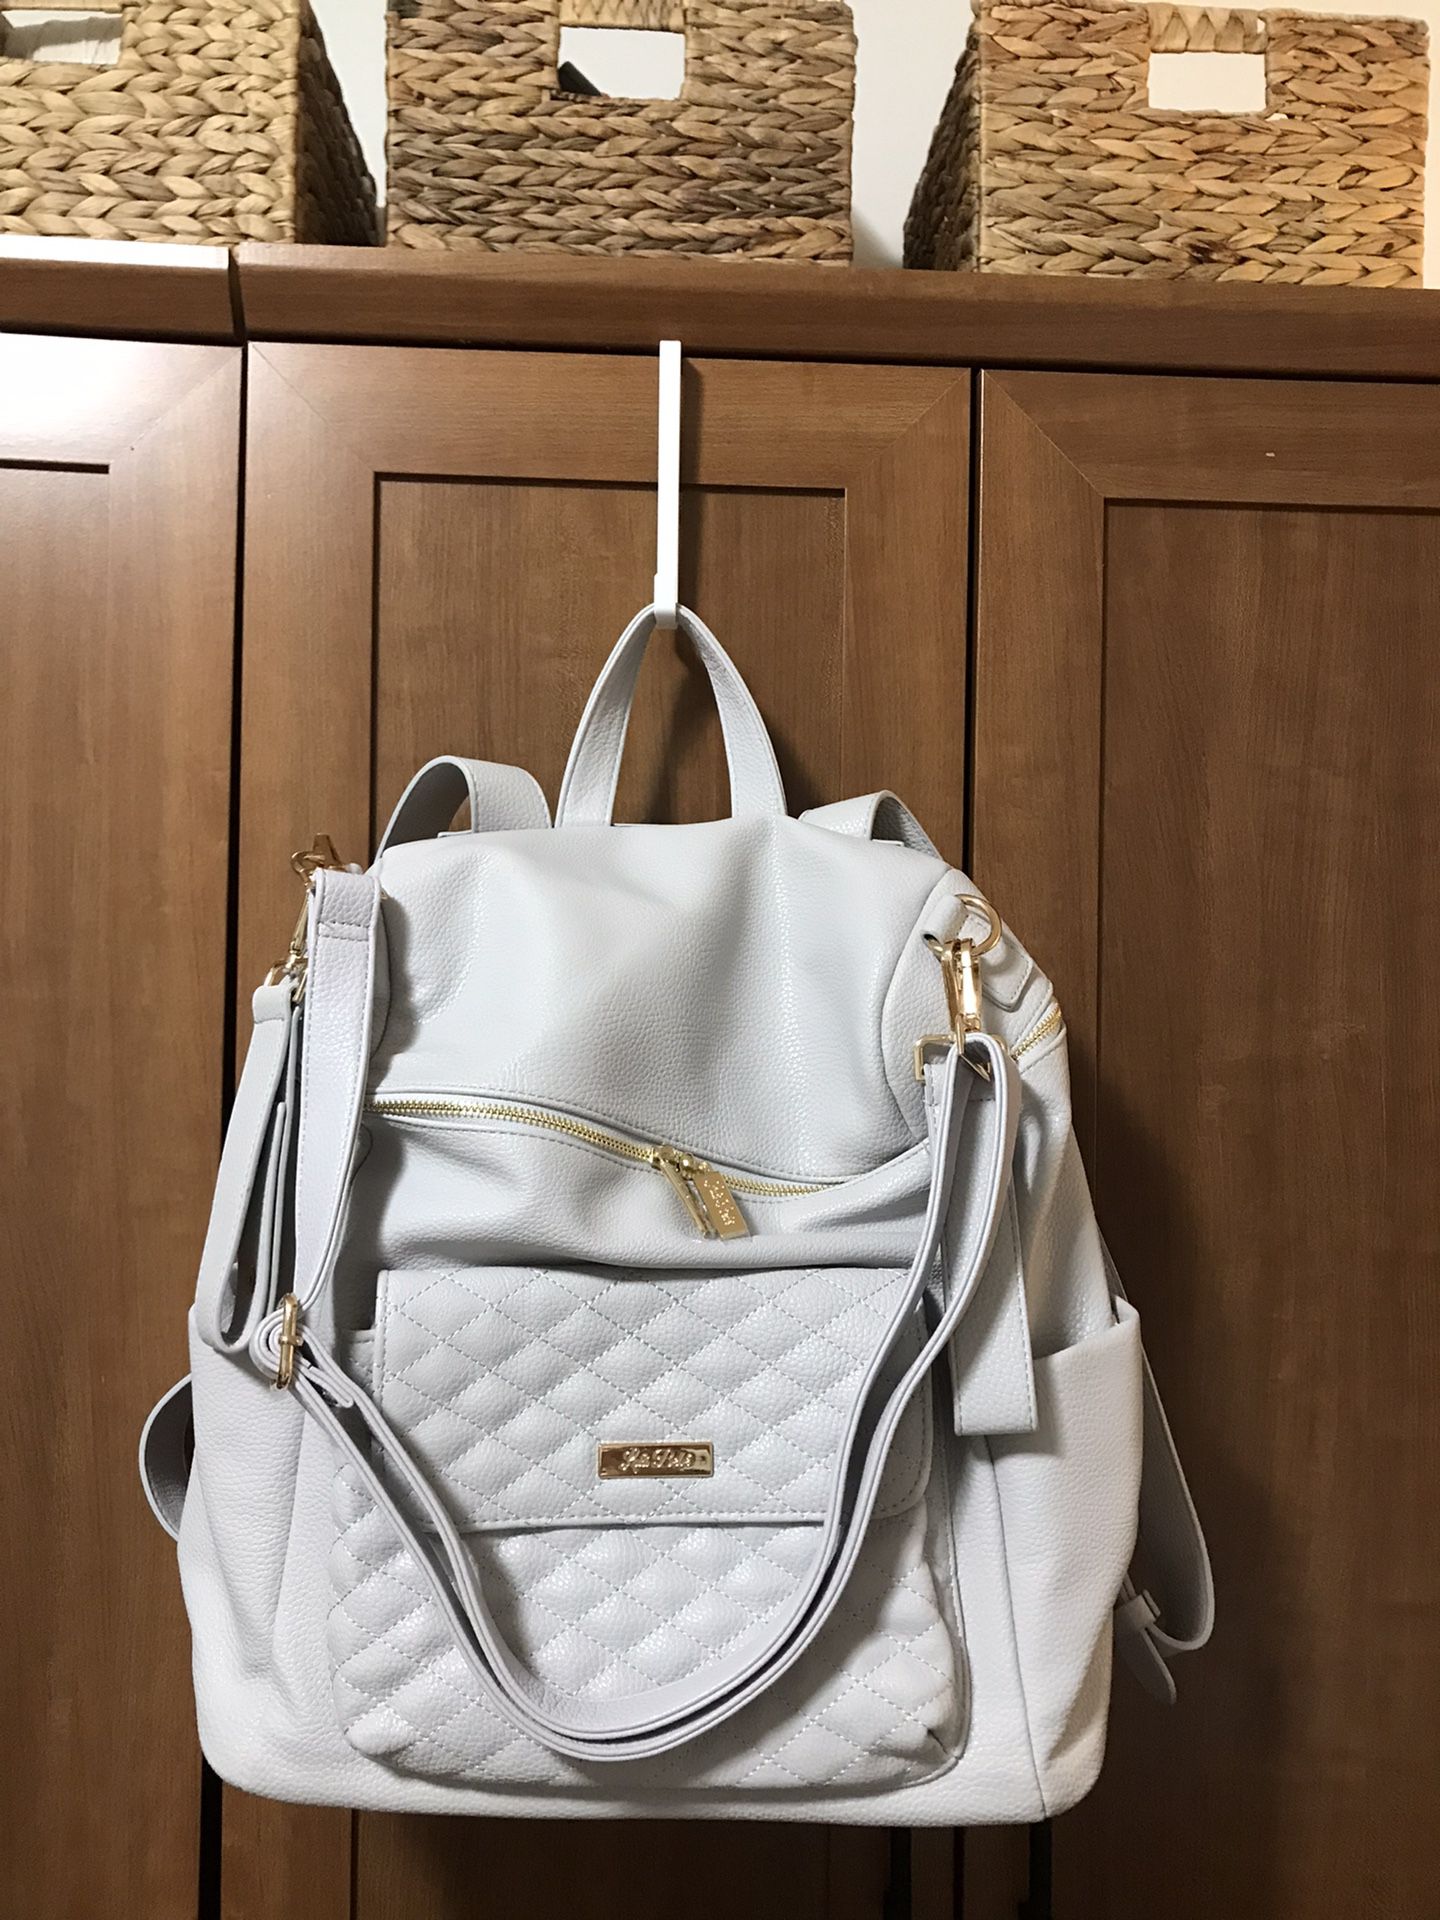 Luli Bebe Monaco Diaper Bag/backpack 